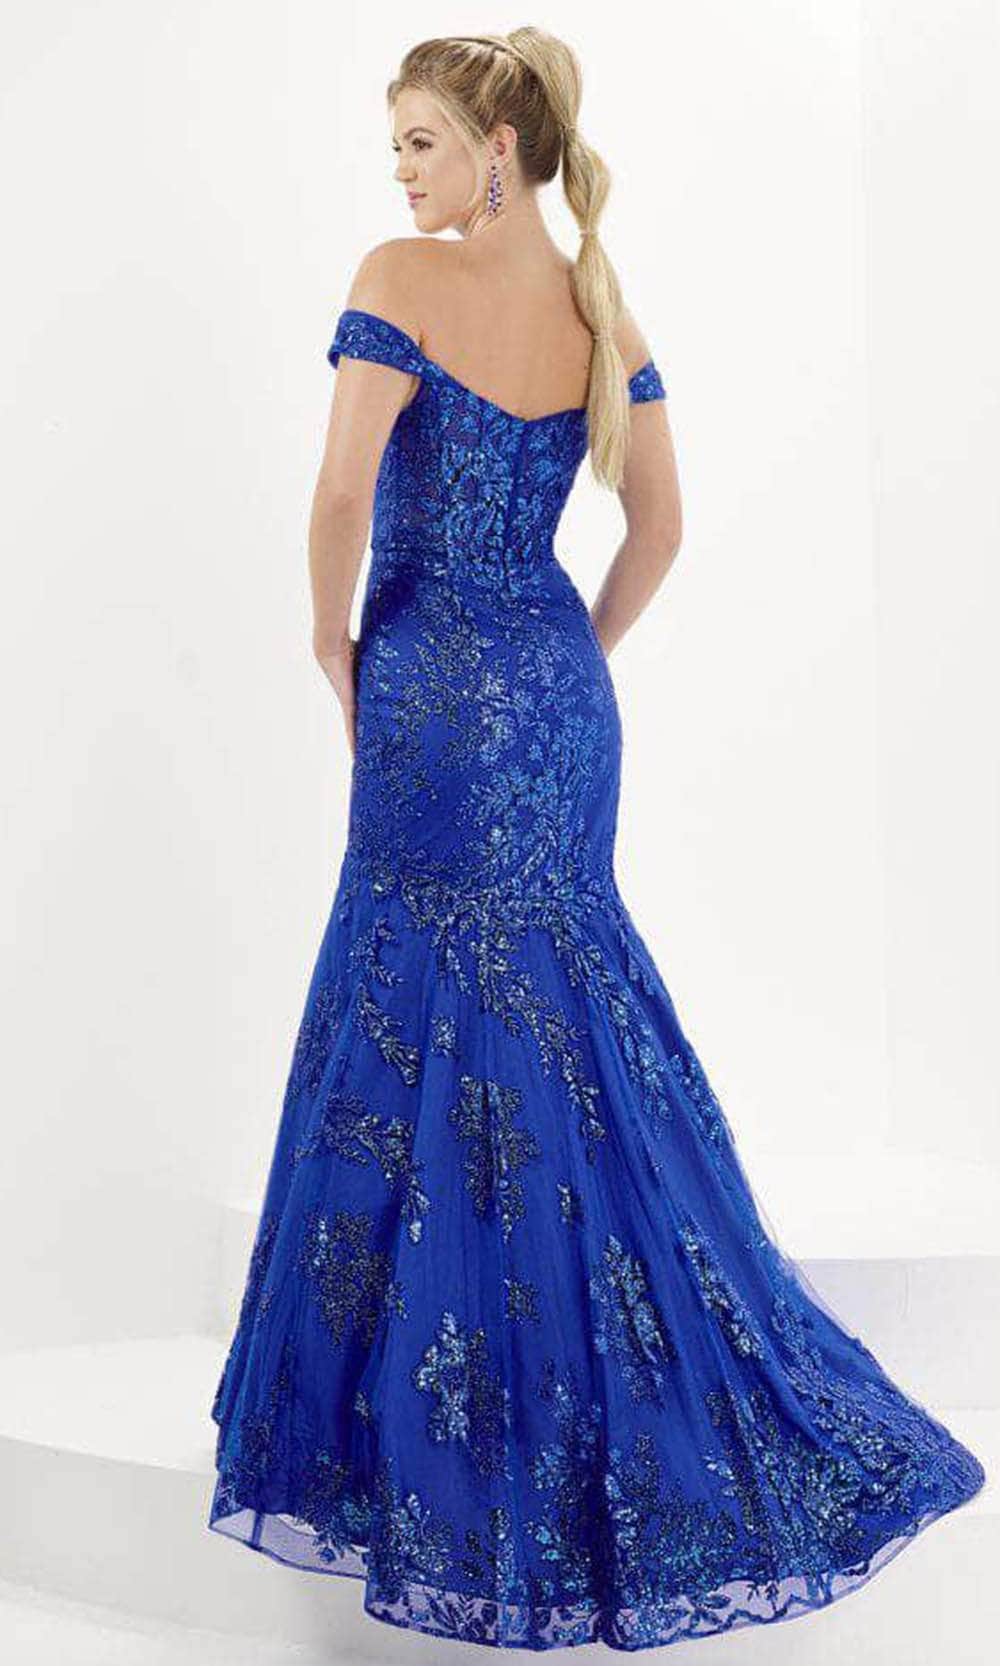 Tiffany Designs 16080 - Off Shoulder Mermaid Evening Gown Evening Dresses